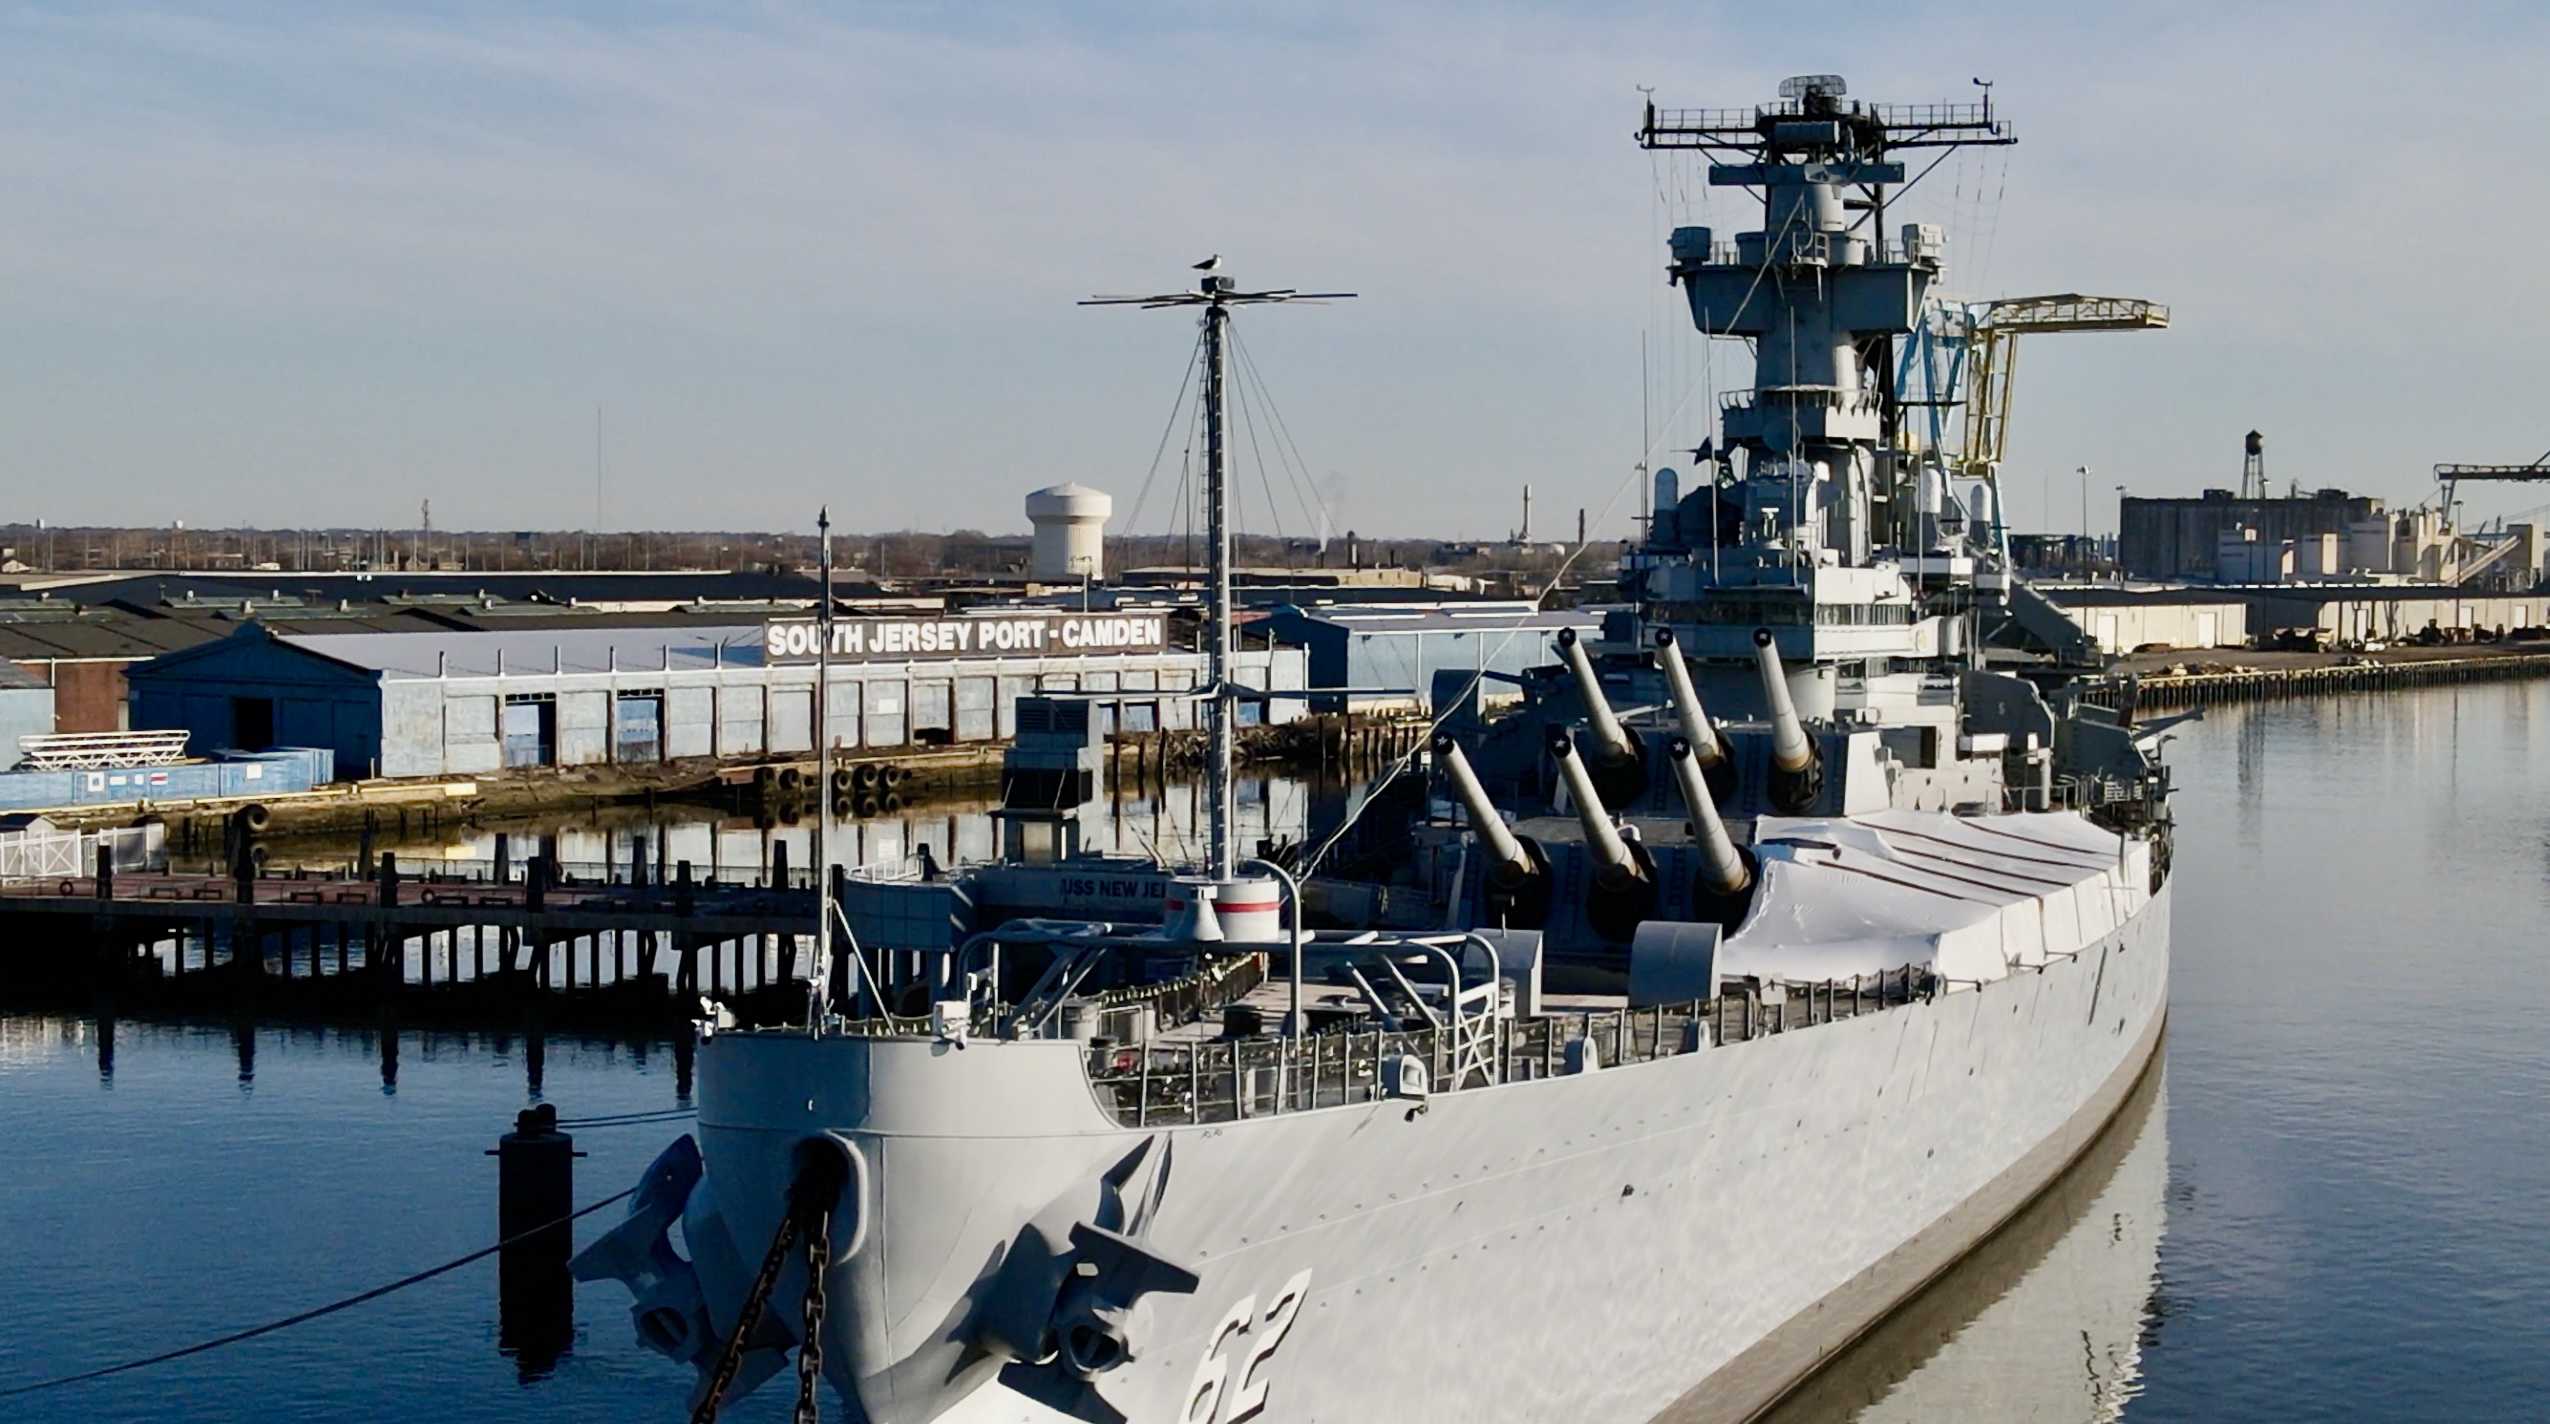 Battleship New Jersey Prepares For Dry-Docking